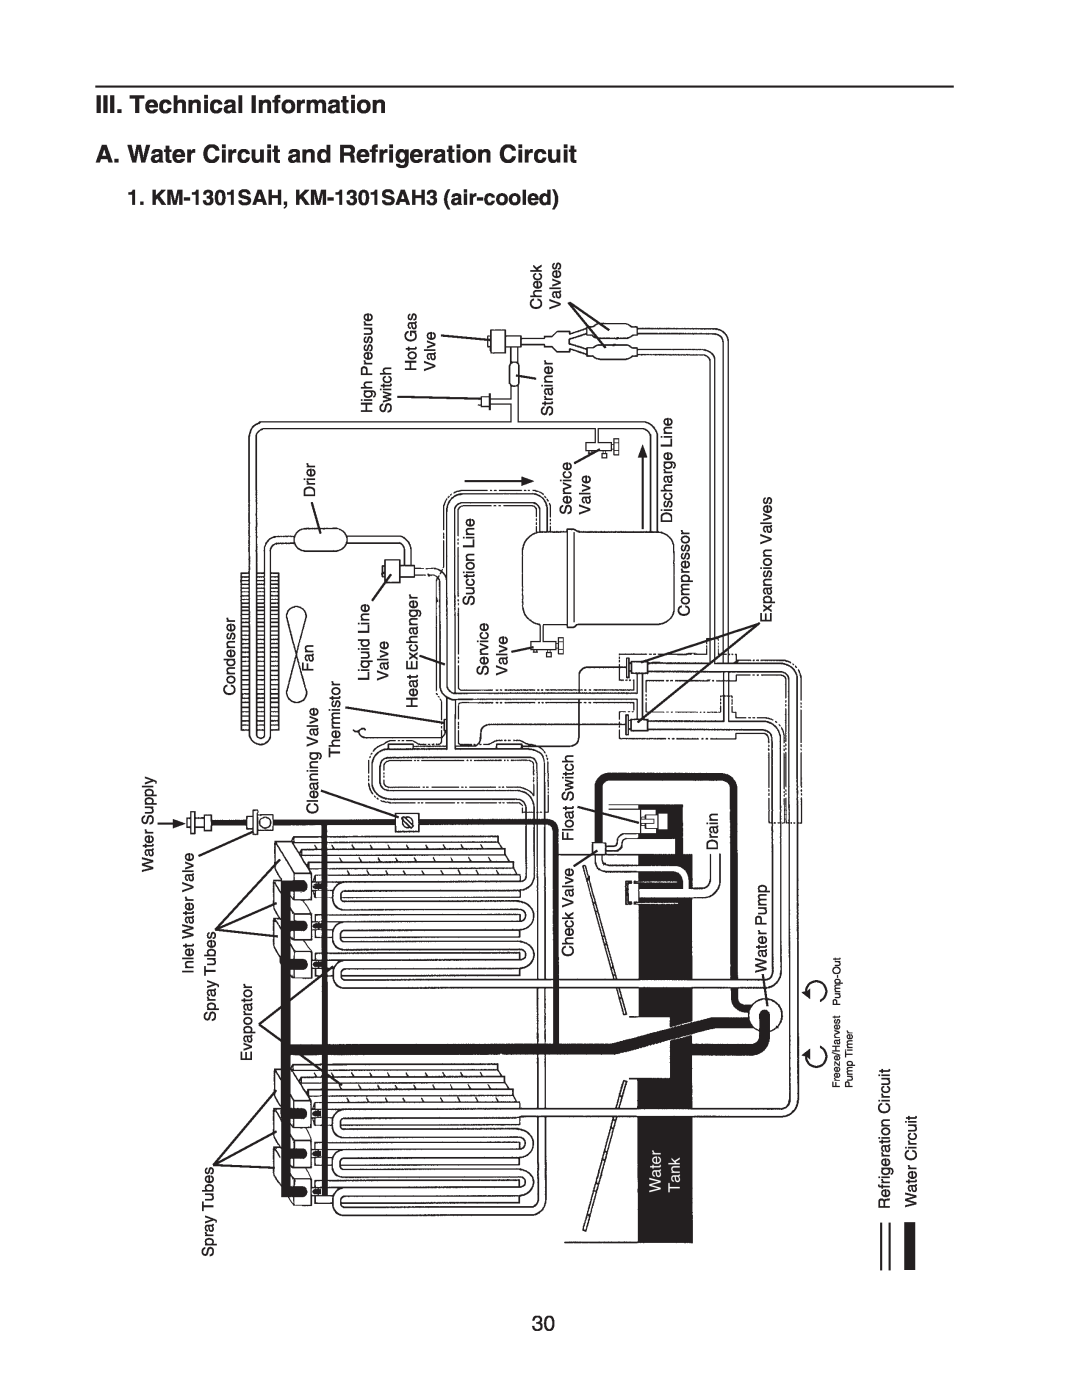 Hoshizaki KM-1301SAH/3, KM-1301SRH/3 III. Technical Information, A. Water Circuit and Refrigeration Circuit, Tank 